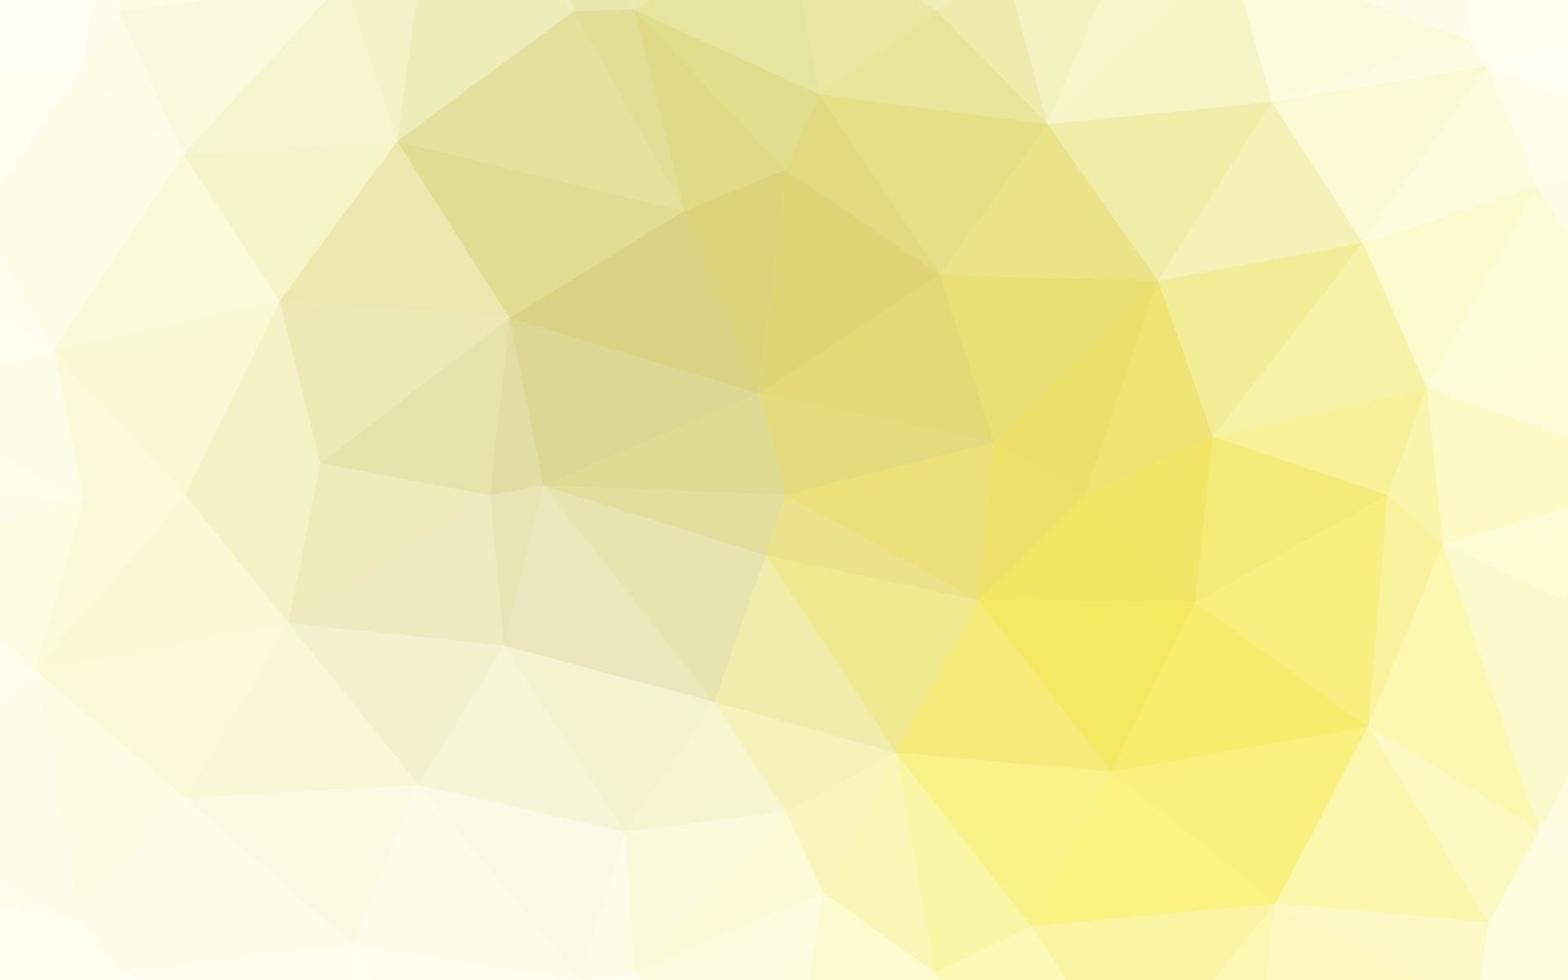 luz amarela, laranja capa poligonal abstrata do vetor. vetor